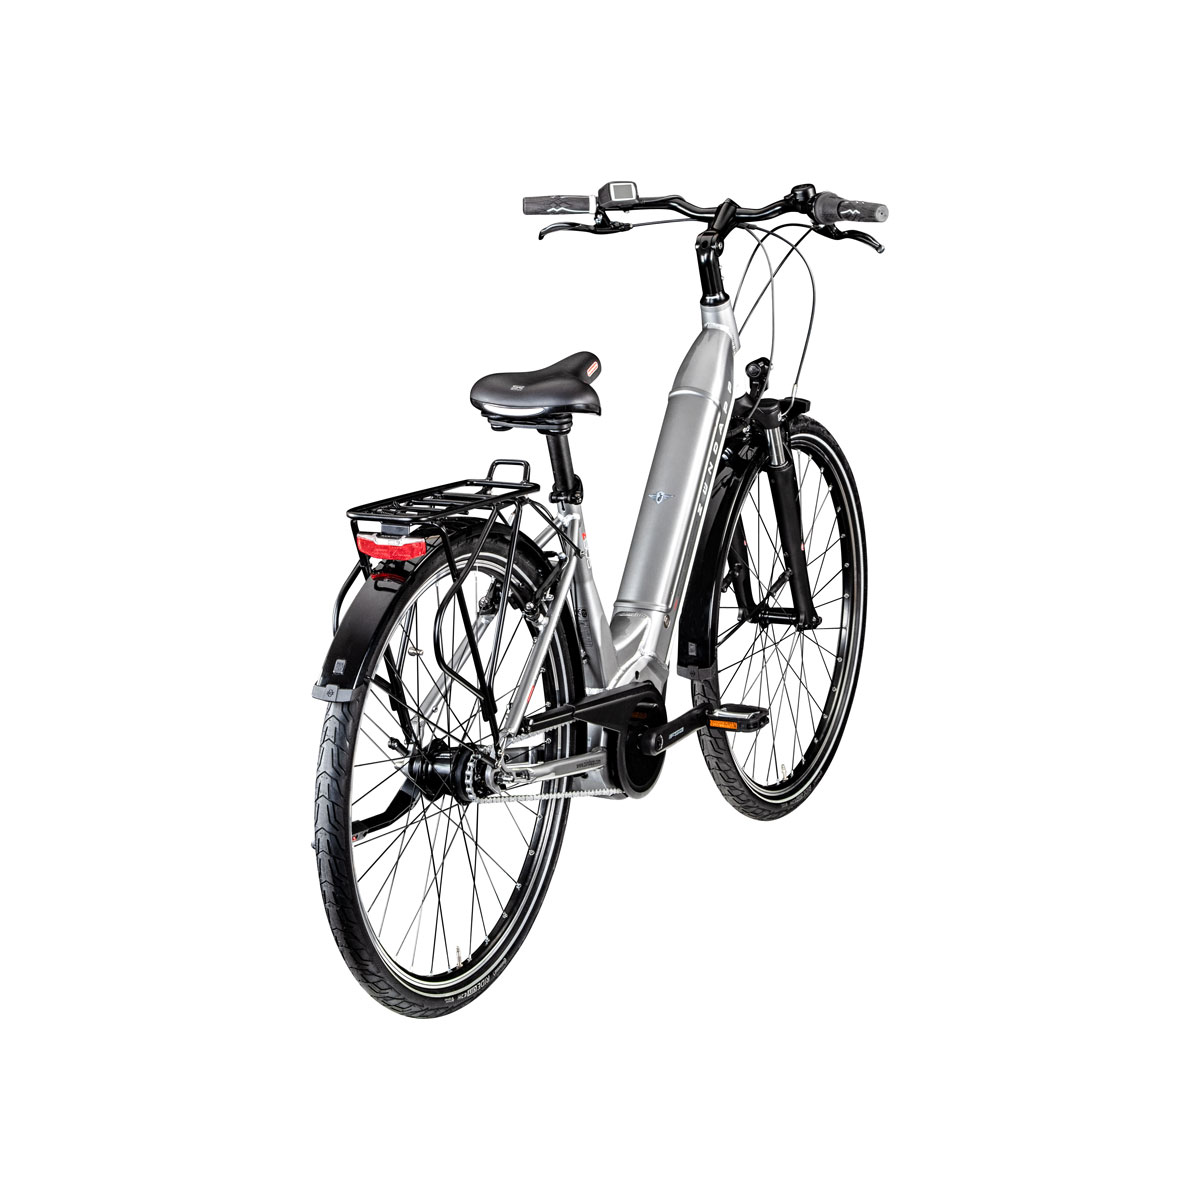 Z905 K018996697 E-Citybike | Zündapp 700c